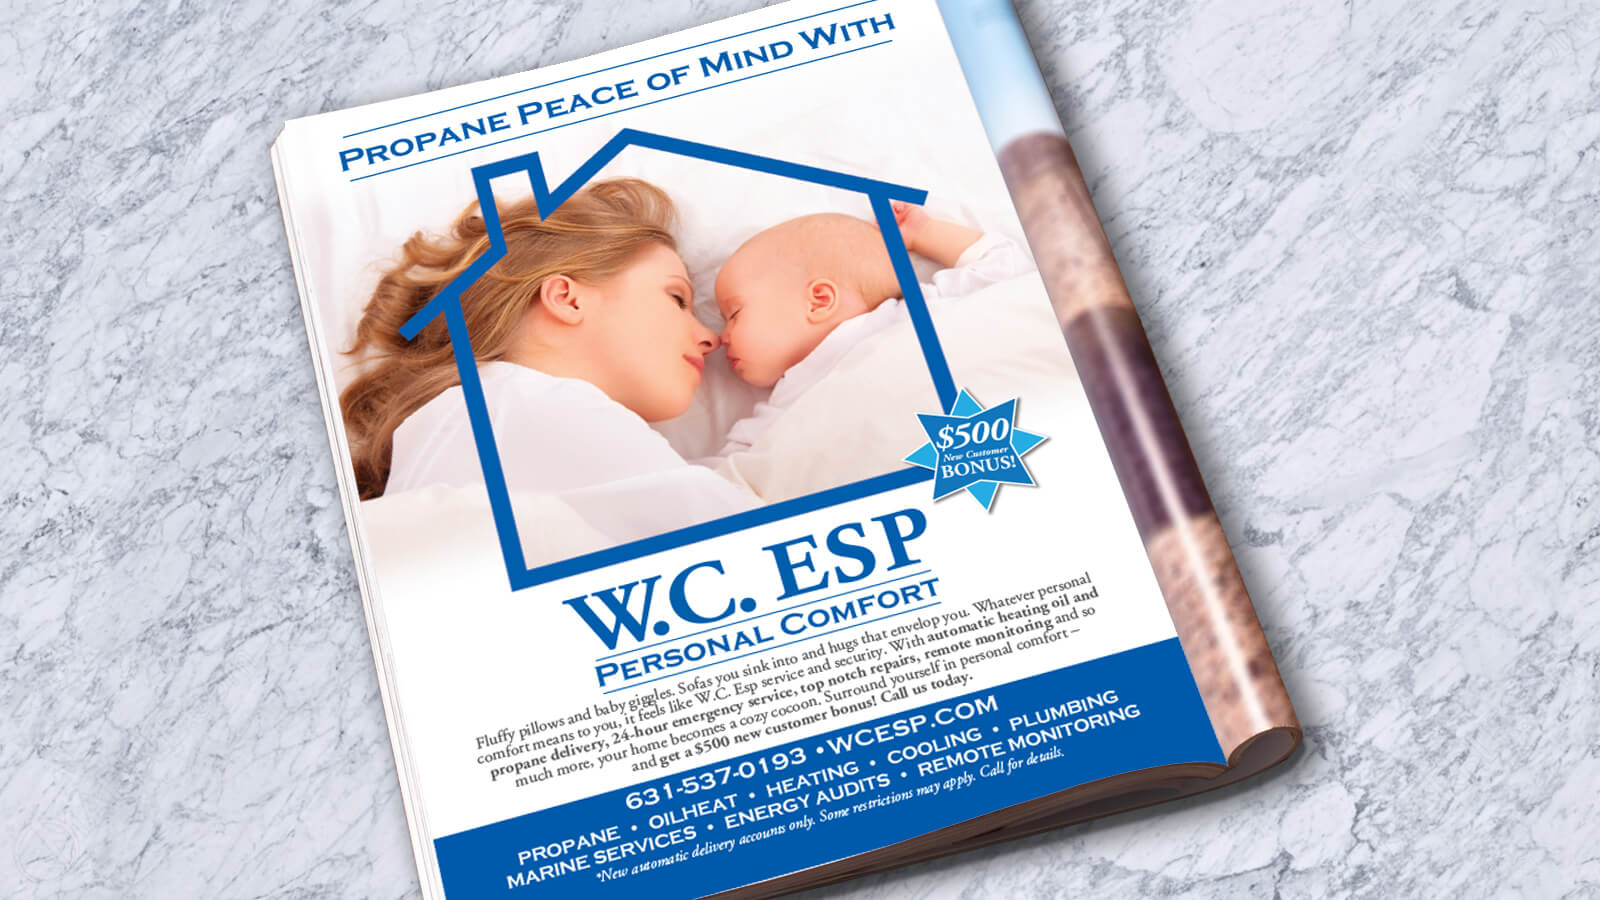 W.C. Esp Ad "Mom & Baby"